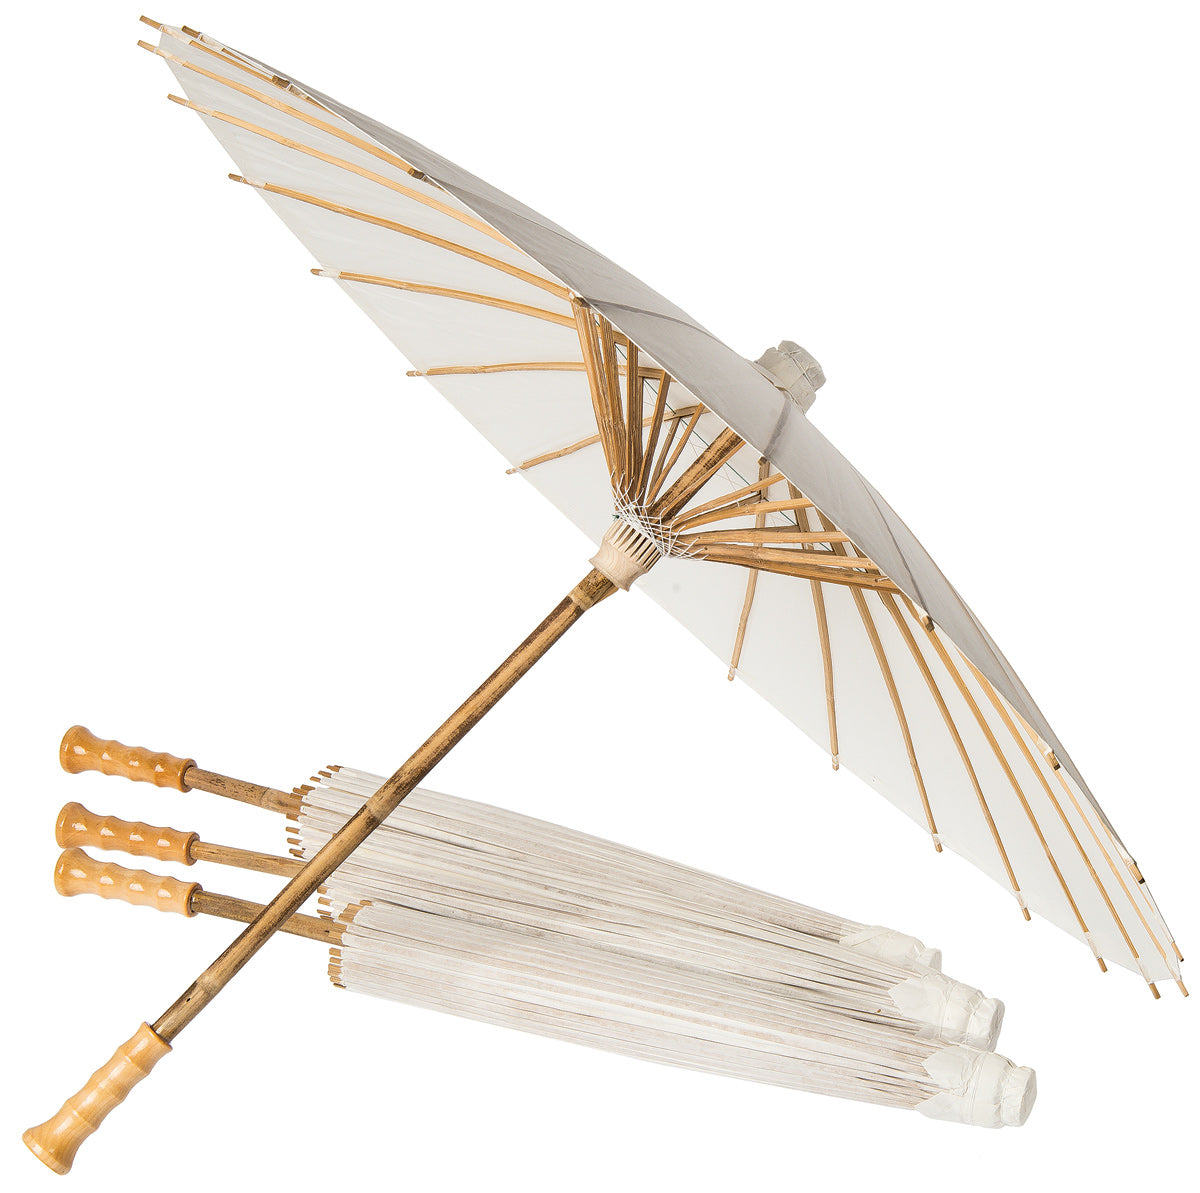 BULK PACK (6) 32" Wedding Beige / Ivory Paper Parasol Umbrellas with Elegant Handle - PaperLanternStore.com - Paper Lanterns, Decor, Party Lights & More